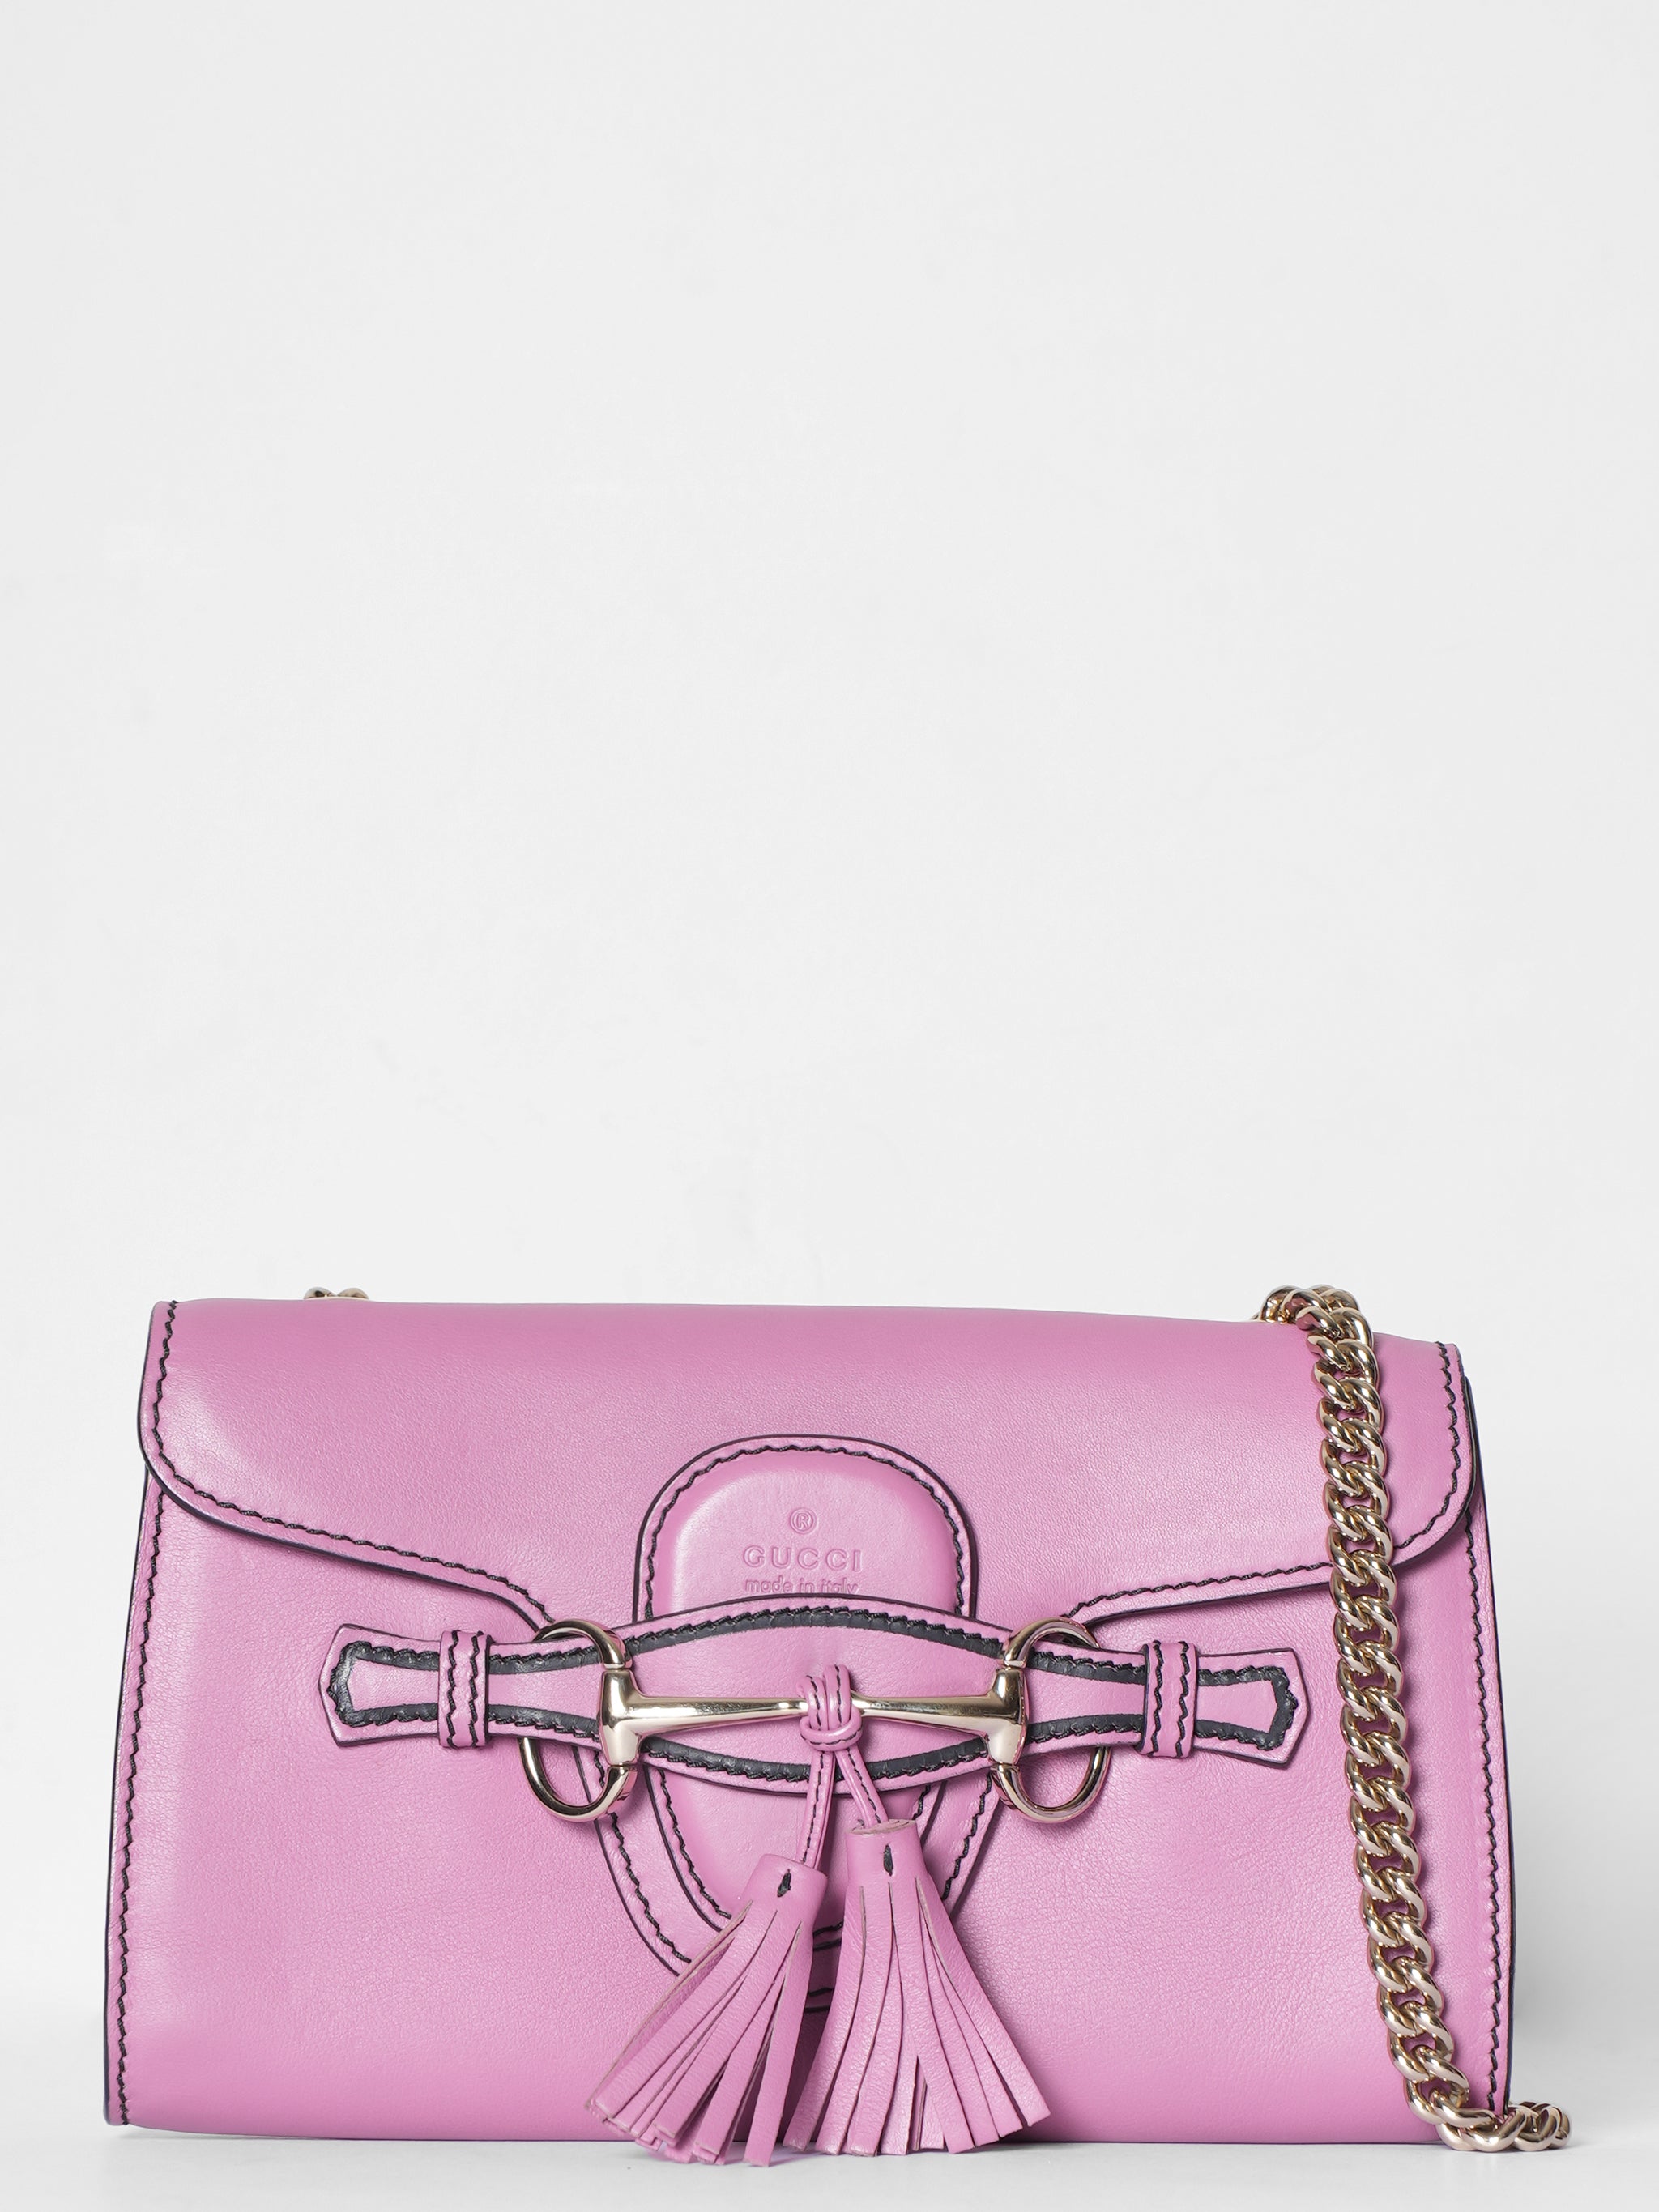 Gucci Horsebit Emily Chain Shoulder Bag